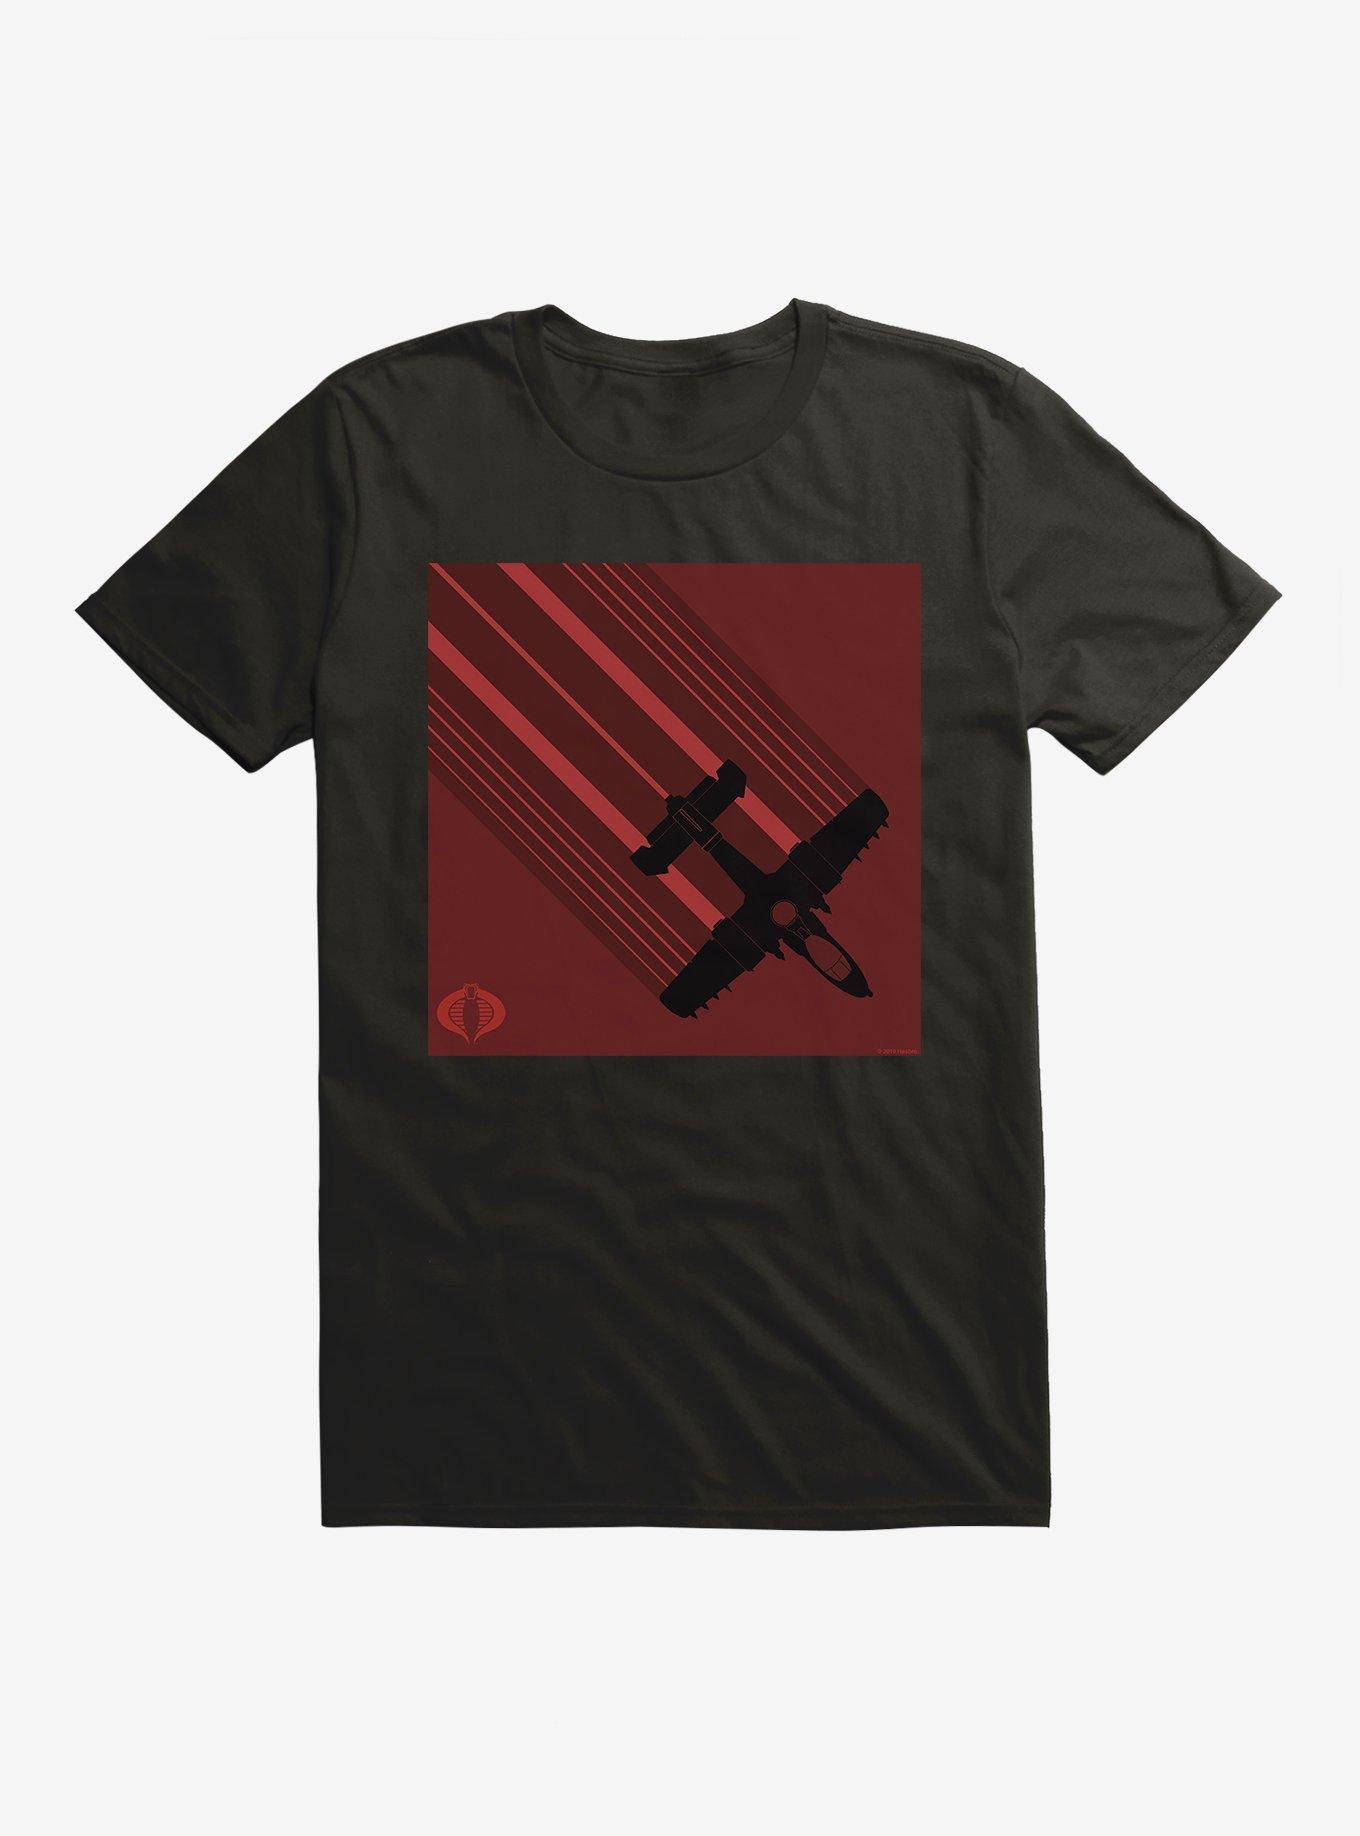 G.I. Joe Fighter Plane T-Shirt